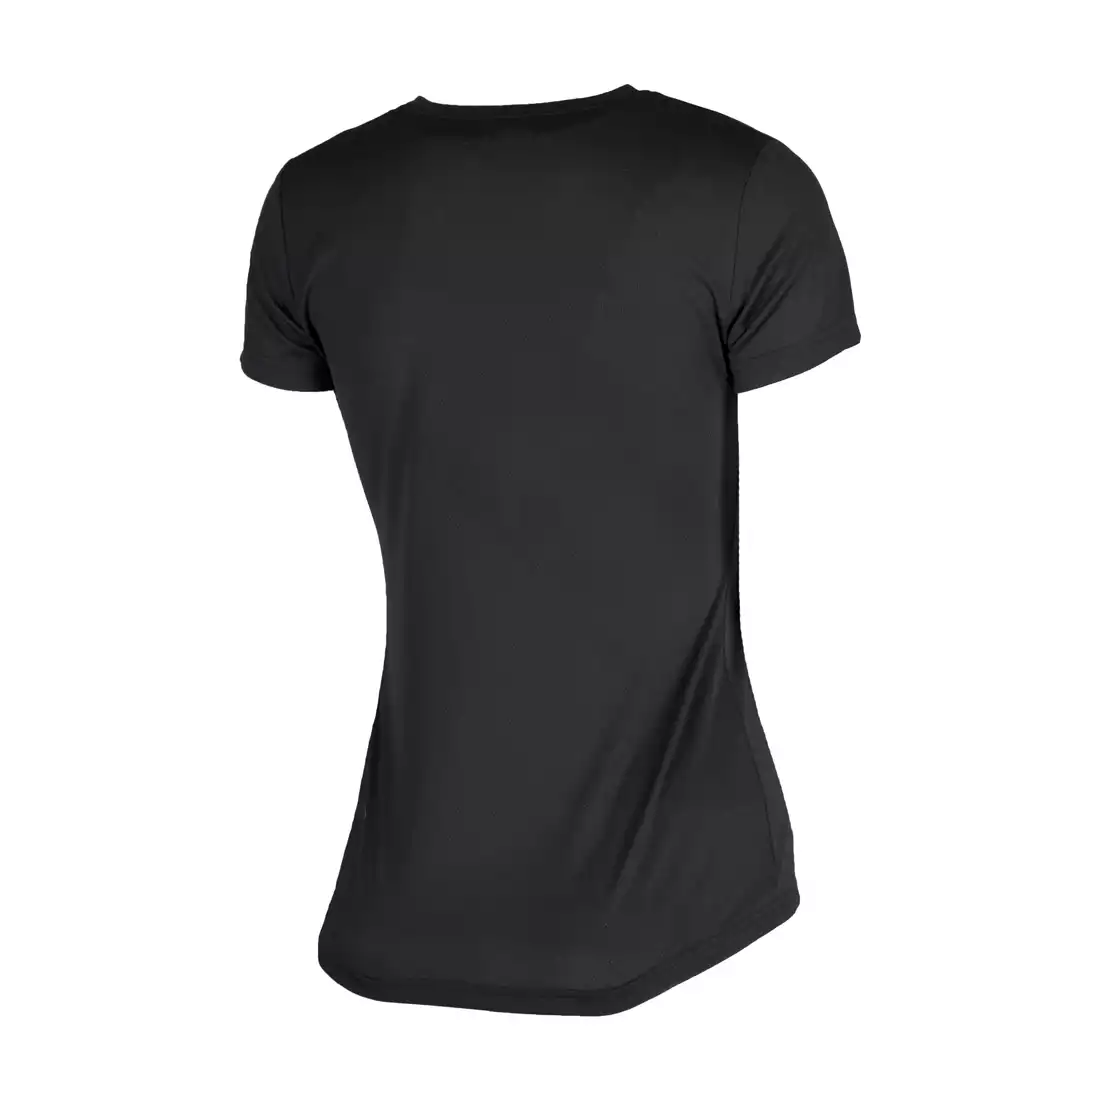 ROGELLI RUN PROMOTION 801.223 - damska koszulka do biegania, czarna